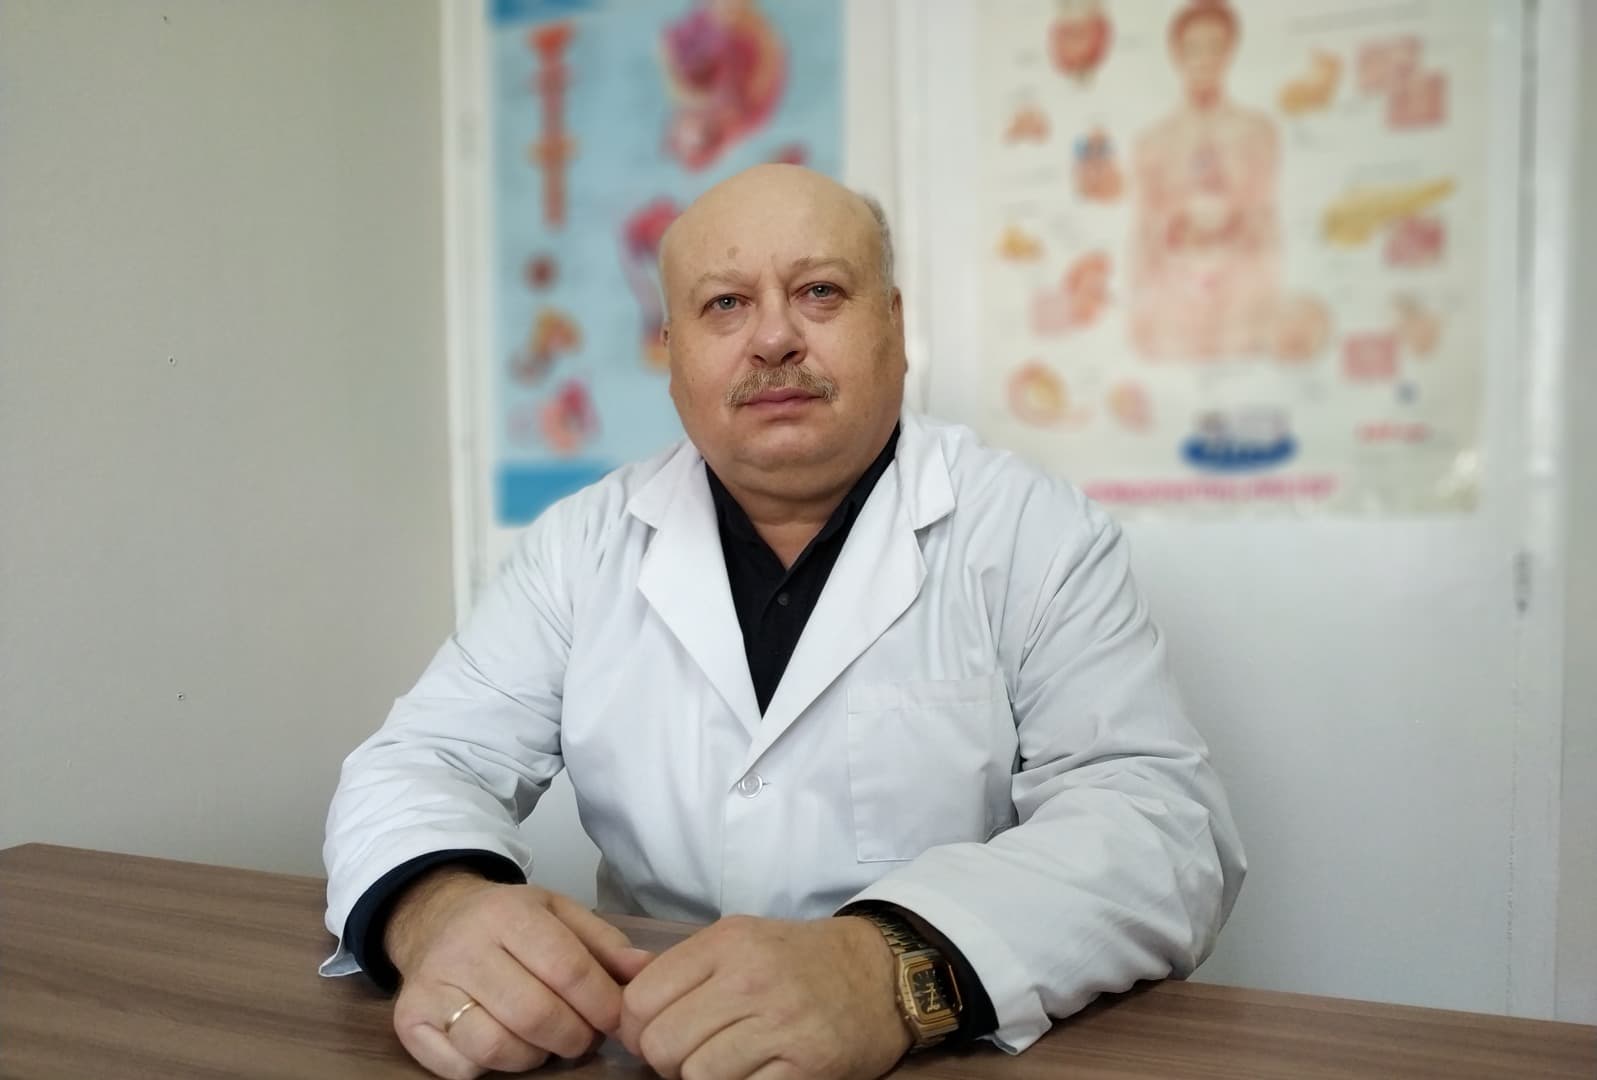 Борис Викторович Корнев, врач-сексолог со стажем работы 23 года